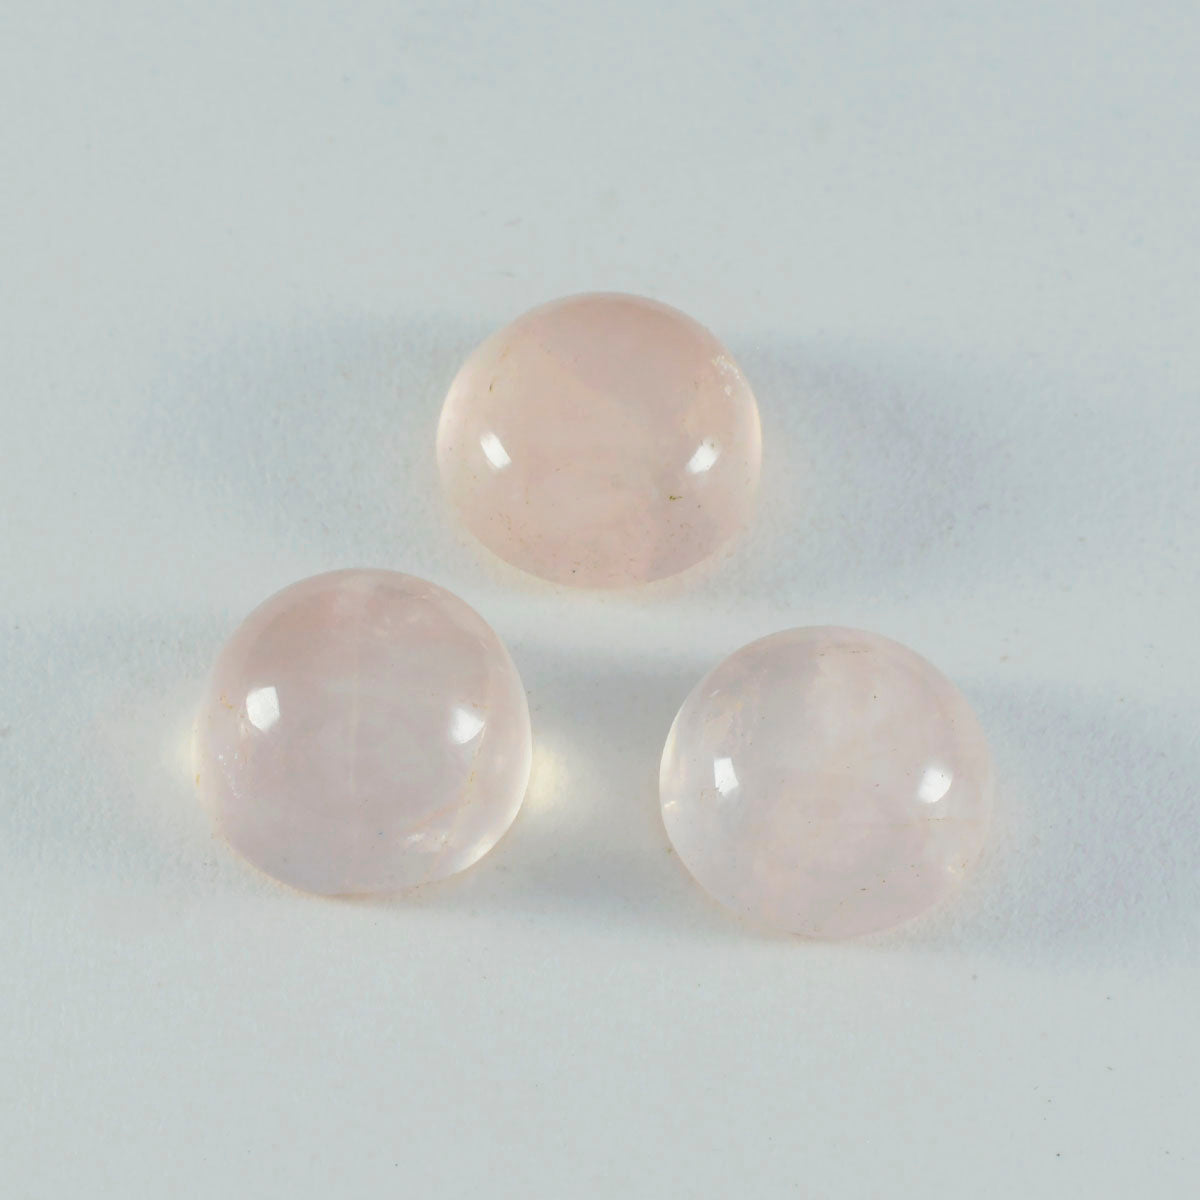 Riyogems 1PC Pink Rose Quartz Cabochon 13x13 mm Round Shape good-looking Quality Loose Gem